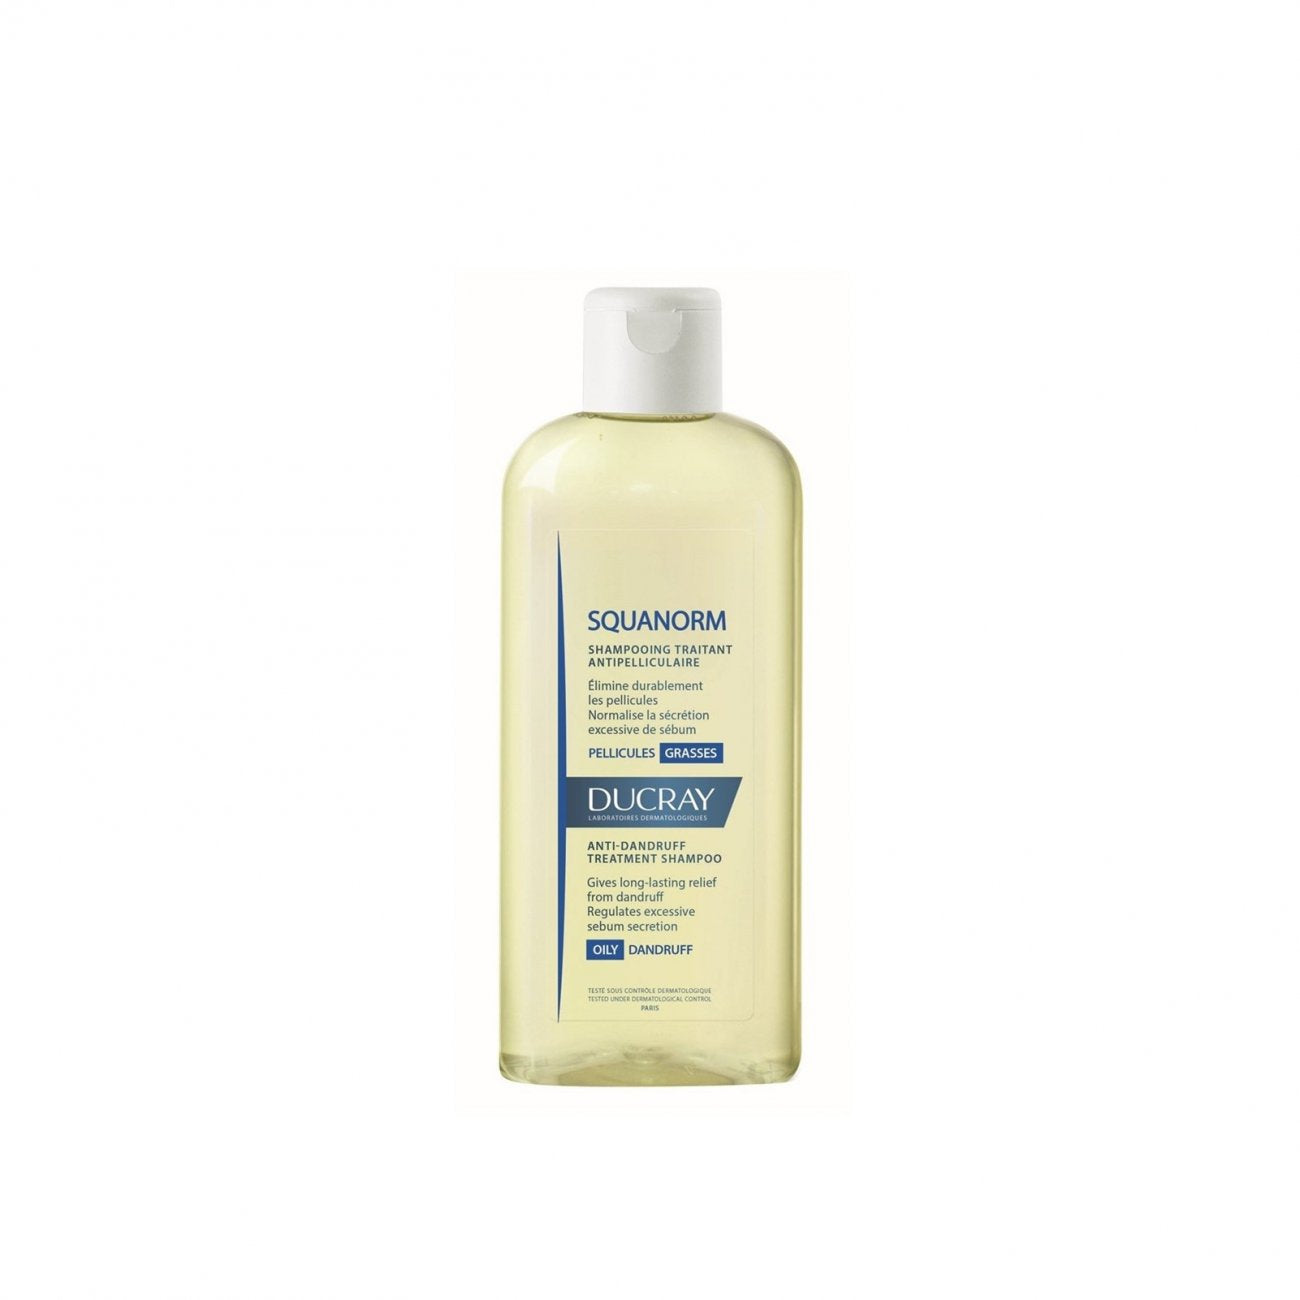 Squanorm Anti-Dandruff Treatment Shampoo Oily Dandruff 200ml